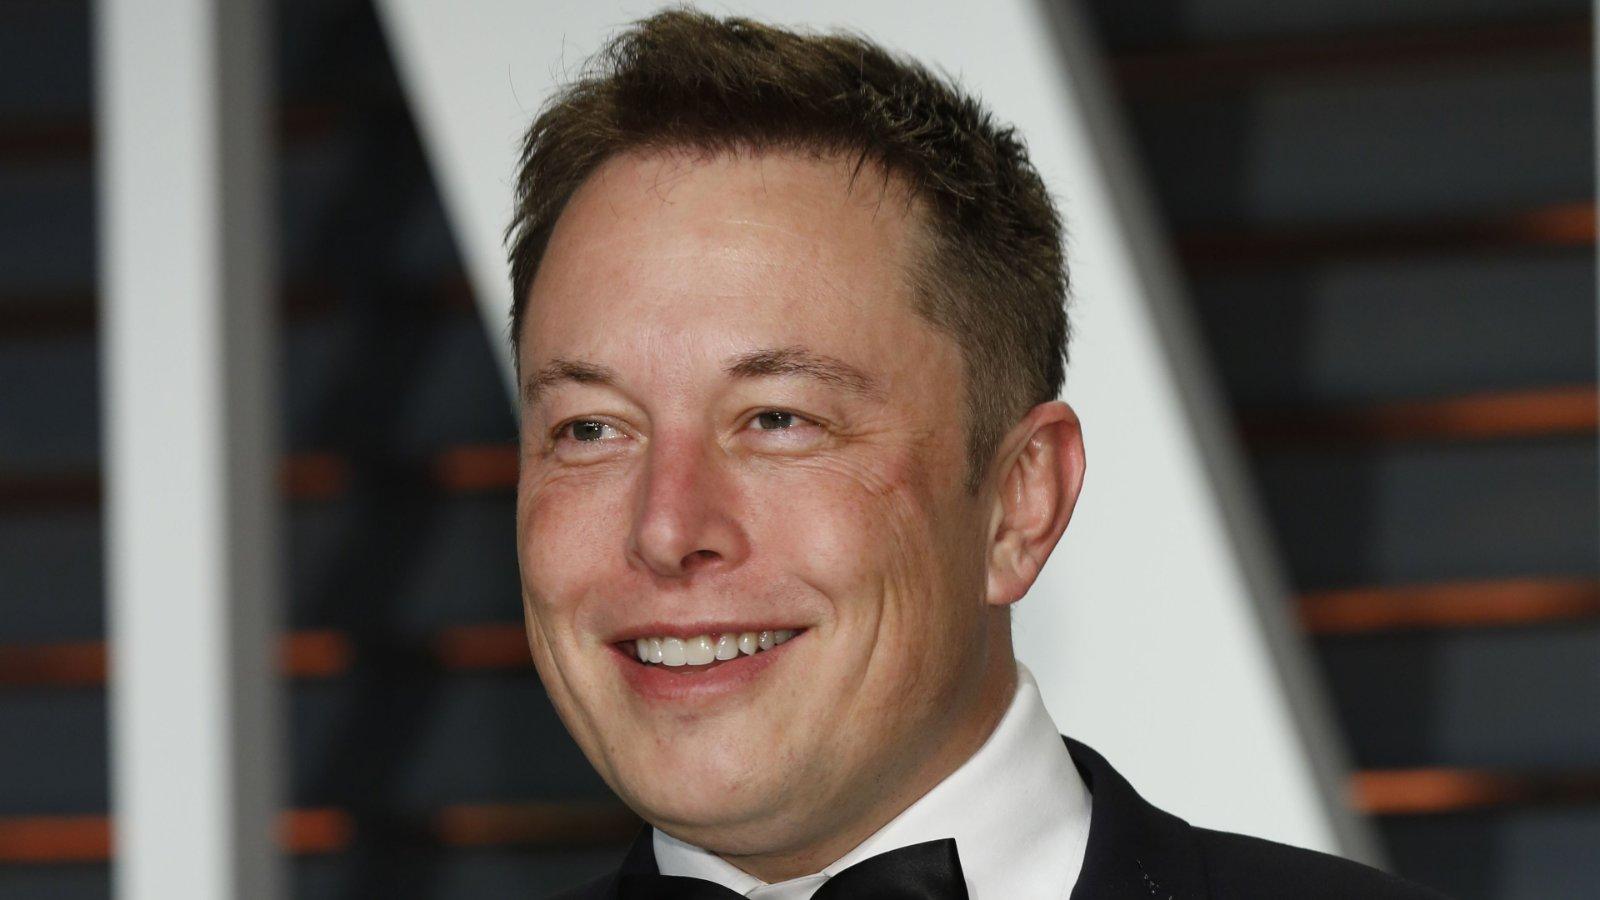 Tesla CEO Elon Musk looks on